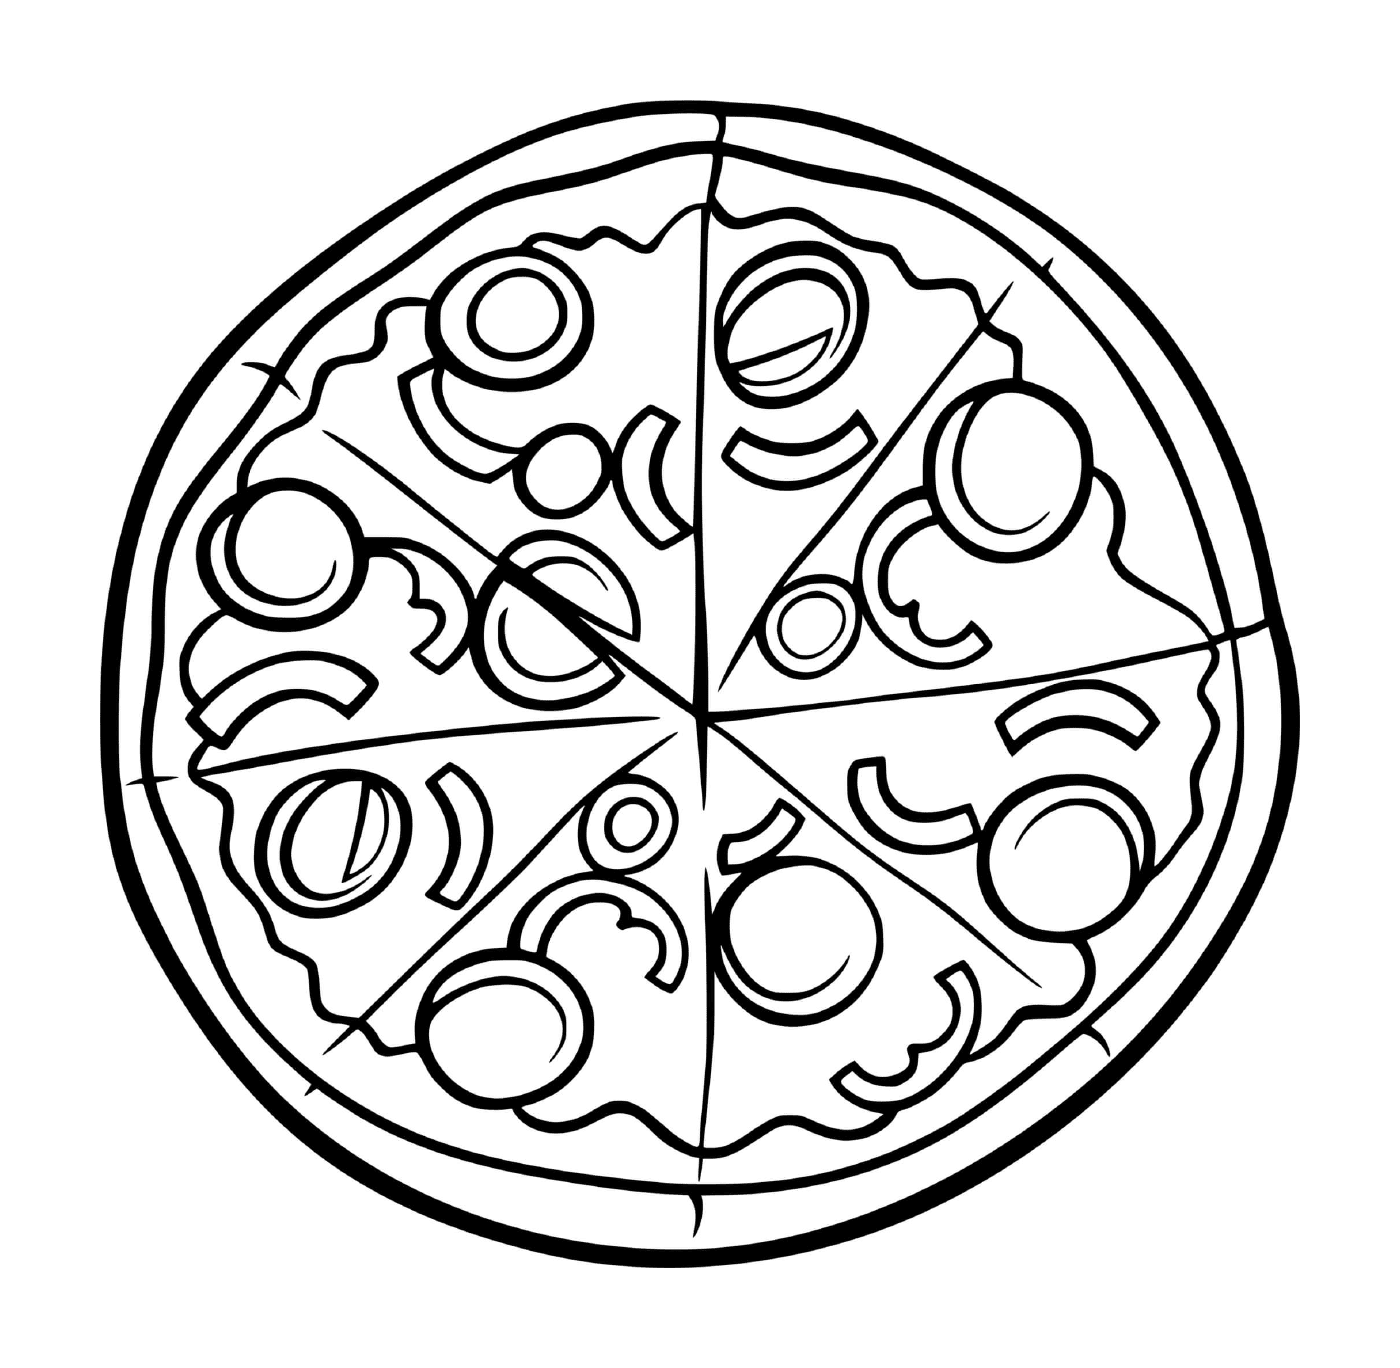  Pizza artesanal da Califórnia 